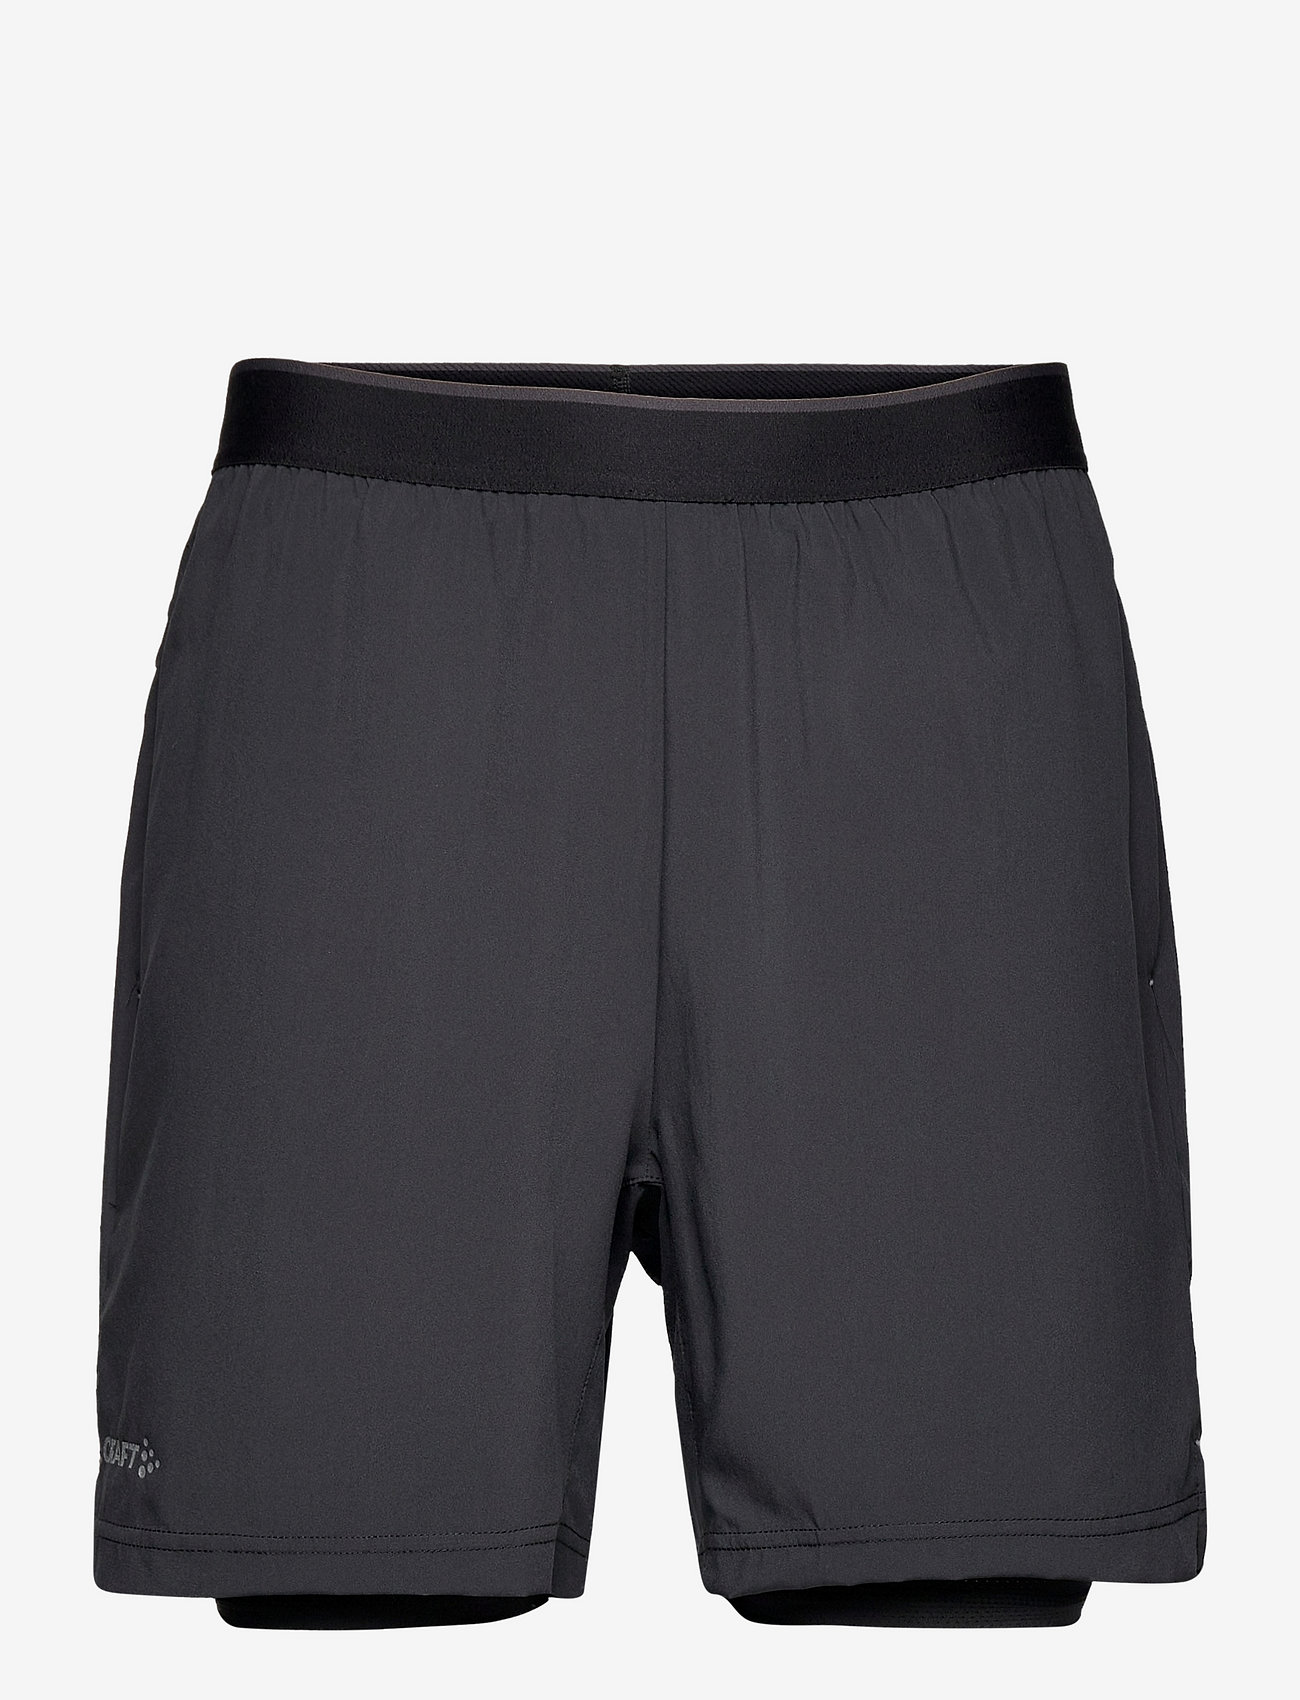 Craft - ADV Essence Perforated 2-in-1 Stretch Shorts M - sportsshorts - black - 0